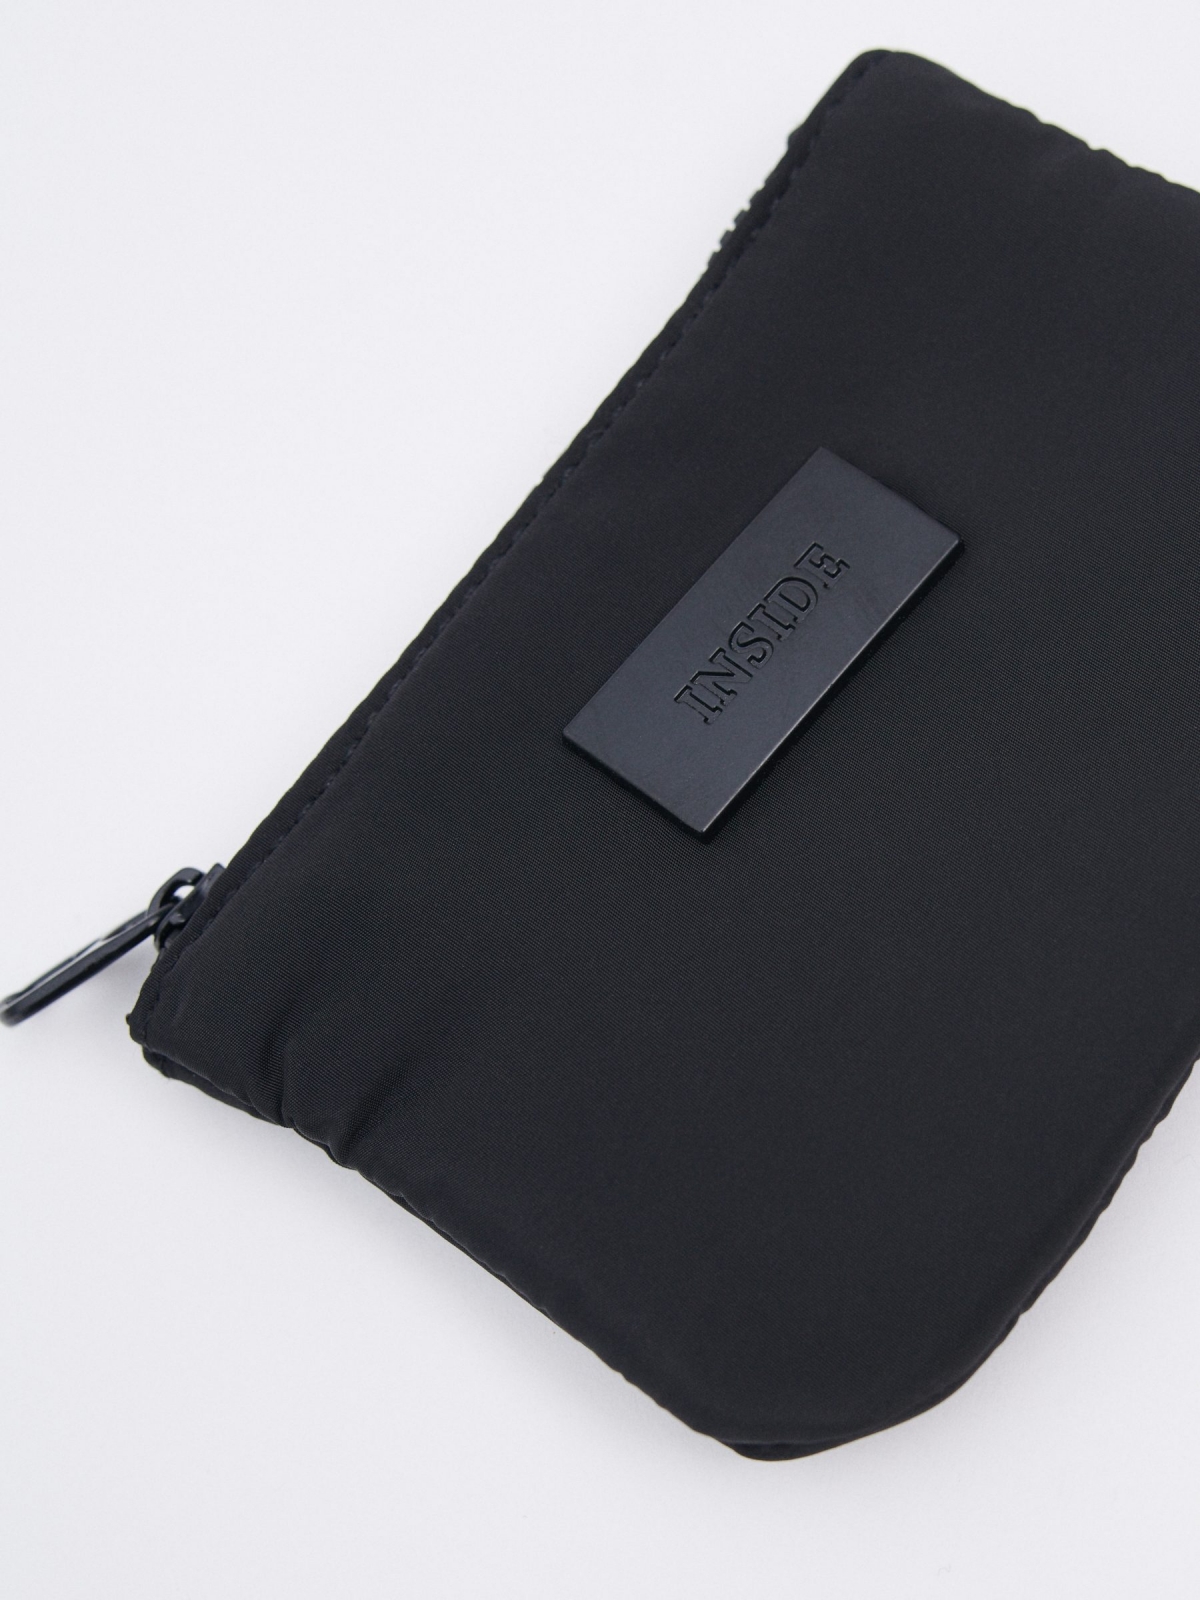 Black nylon purse black back view